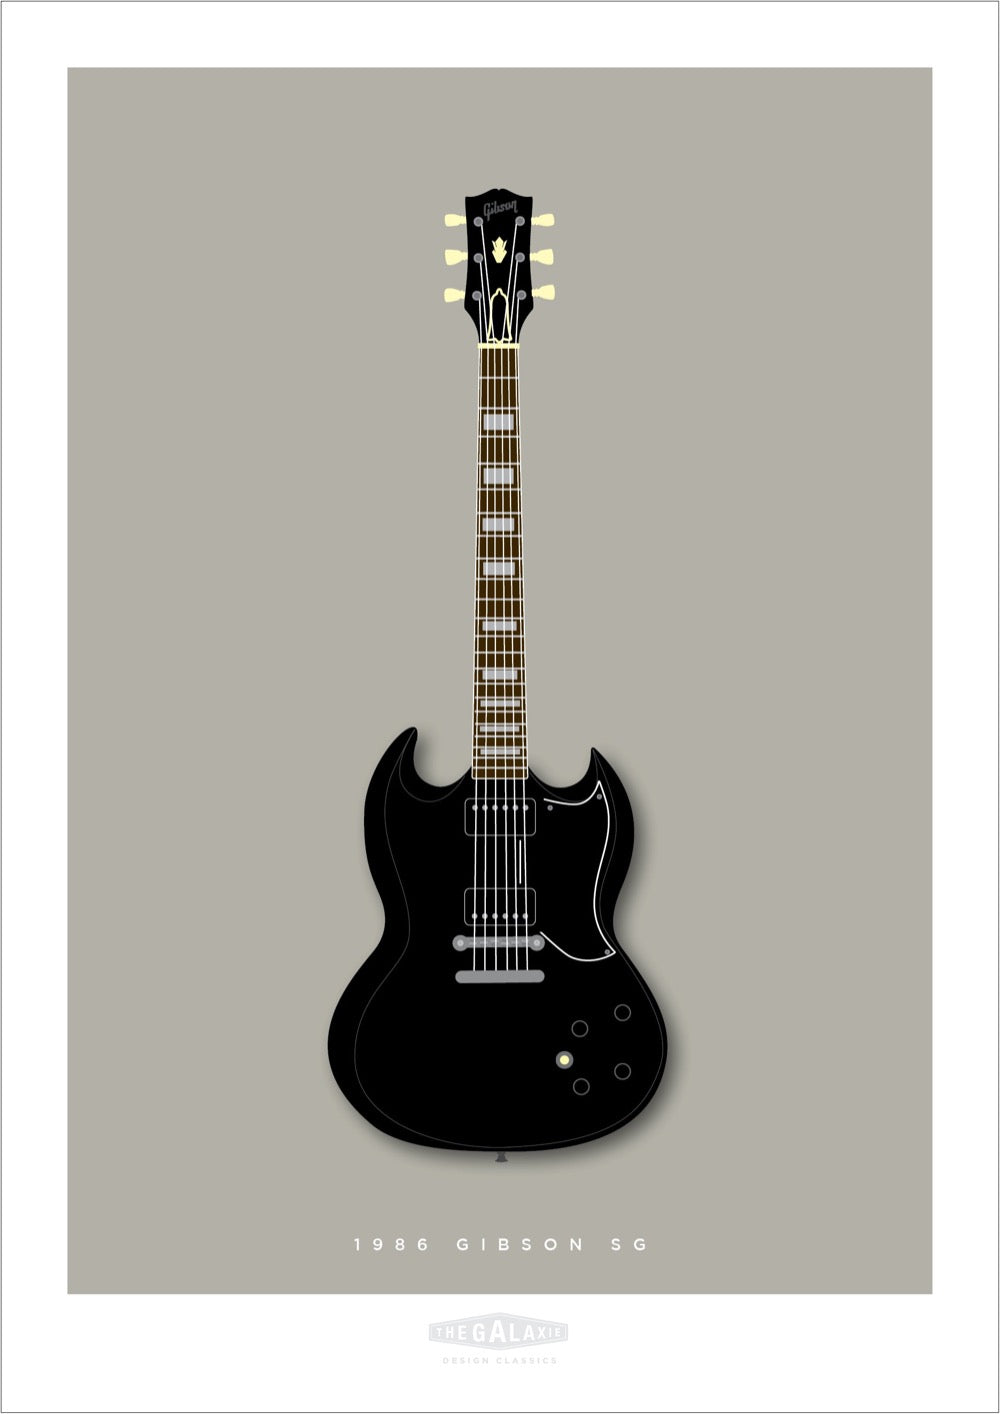 An original hand drawn poster of a sleek black 1986 Gibson SG on a light grey background.